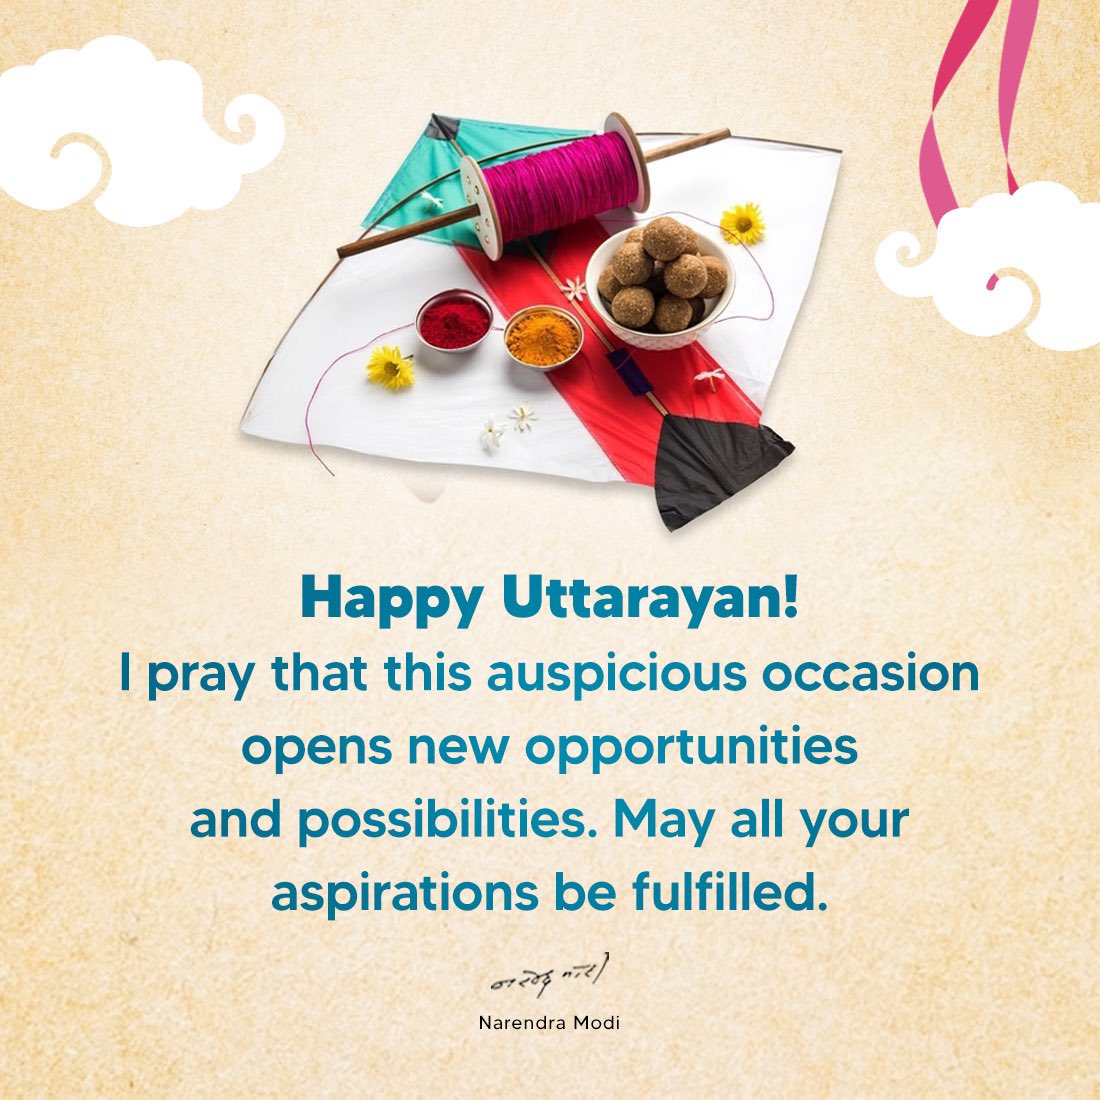 Greetings on Uttarayan!